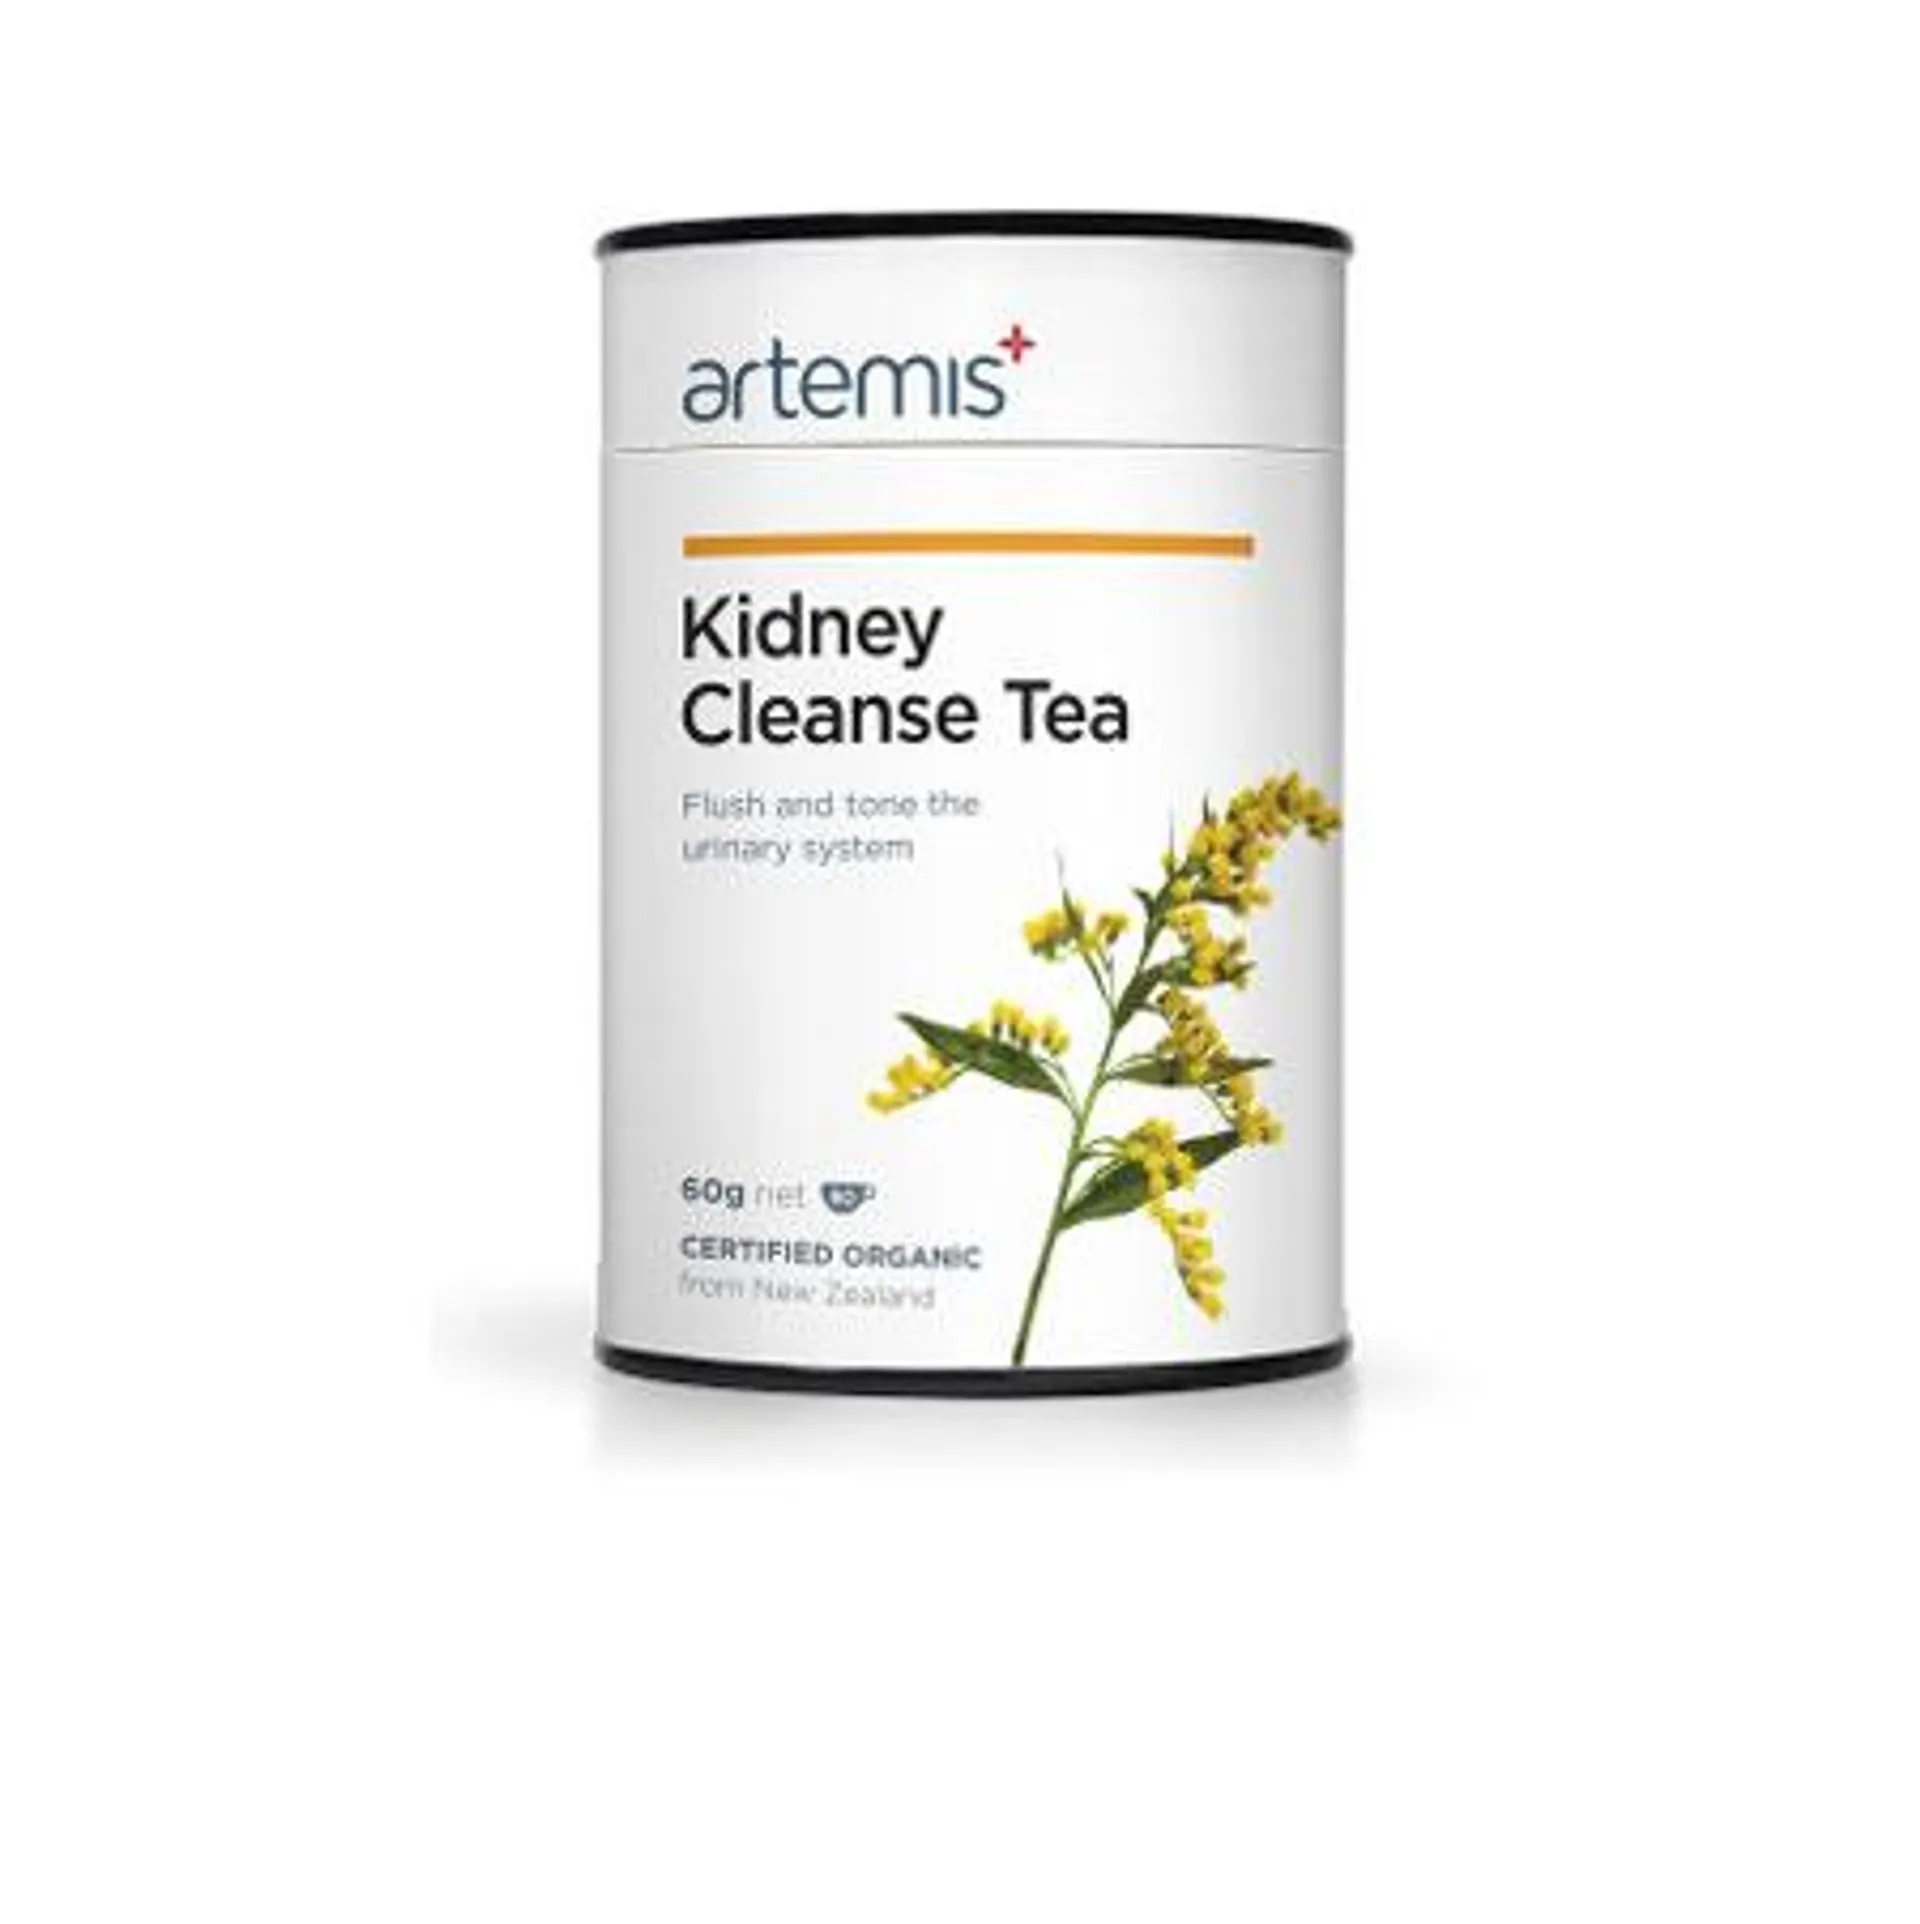 Artemis Kidney Cleanse Tea